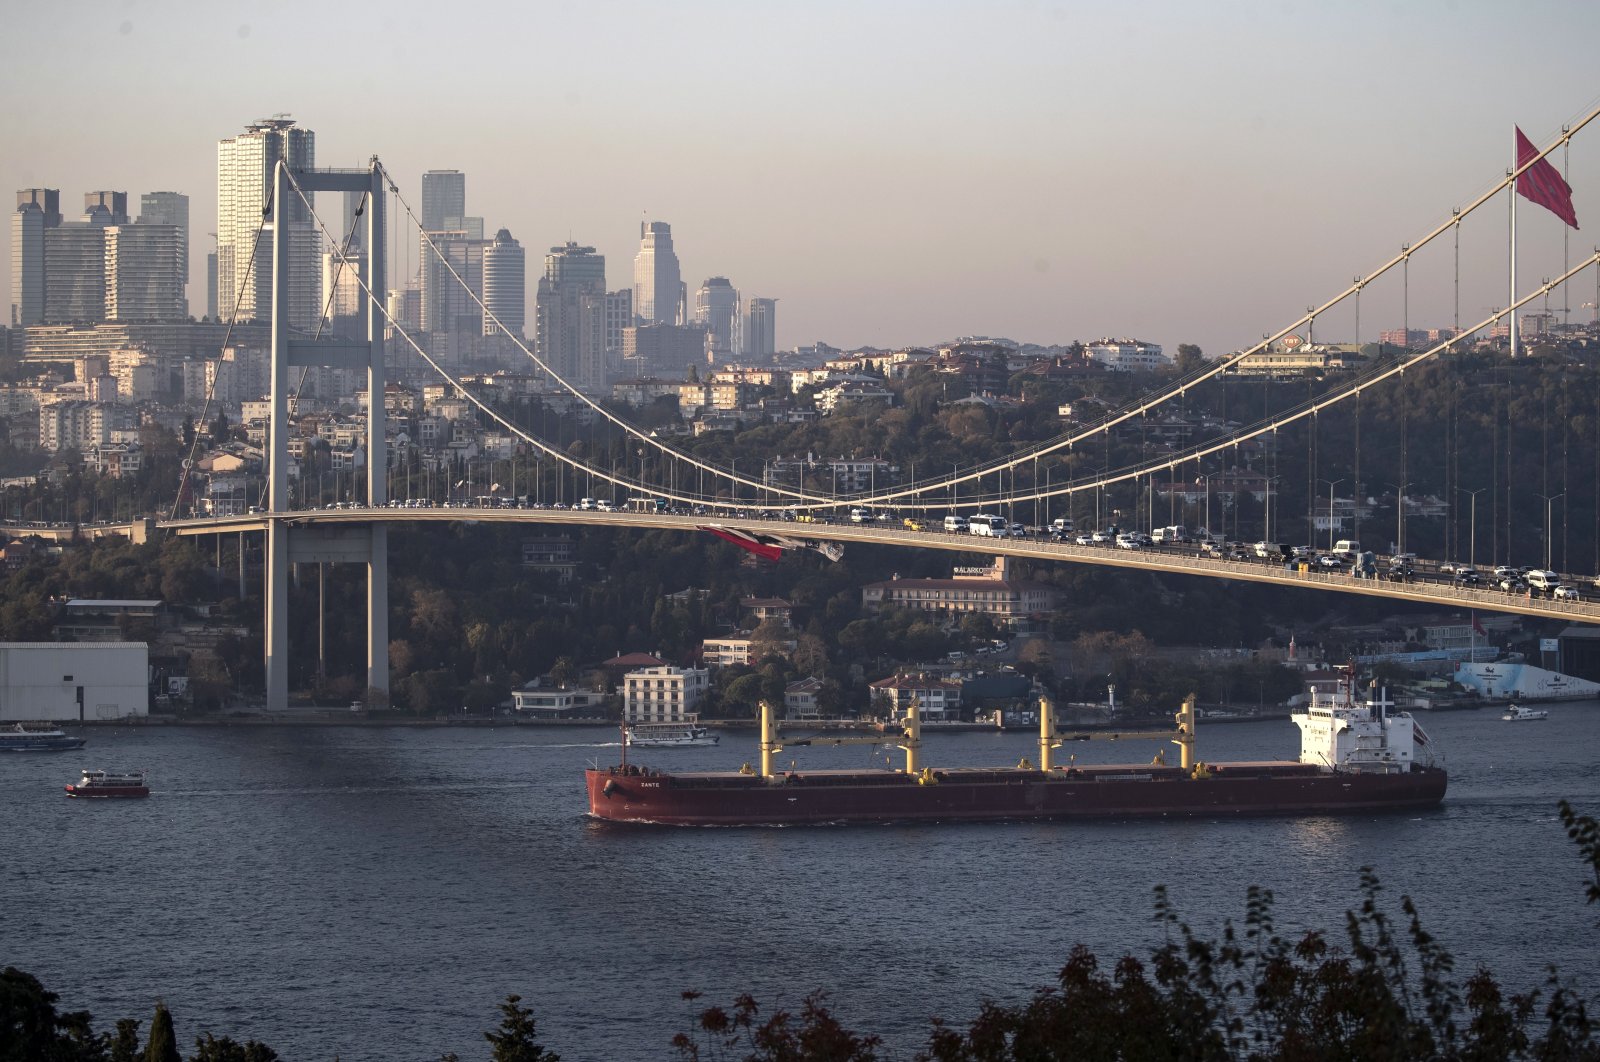 The cargo ship Zante, carrying Ukranian grain as part of the Black Sea grain deal, sails on the Bosporus off the shores of Yenikapı, in Istanbul, Türkiye, Nov. 2, 2022. (EPA Photo)